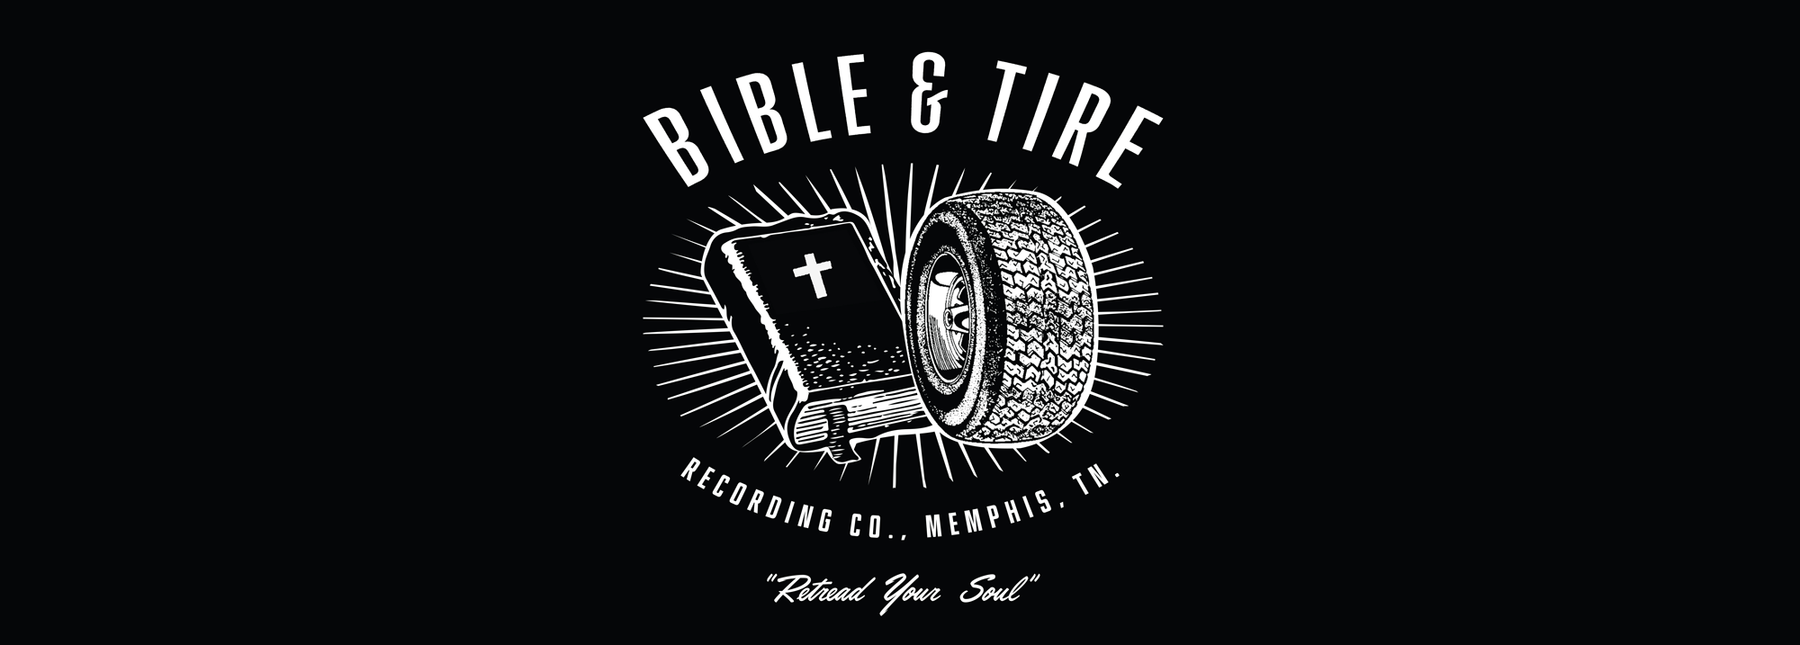 Bible & Tire Recording Co.